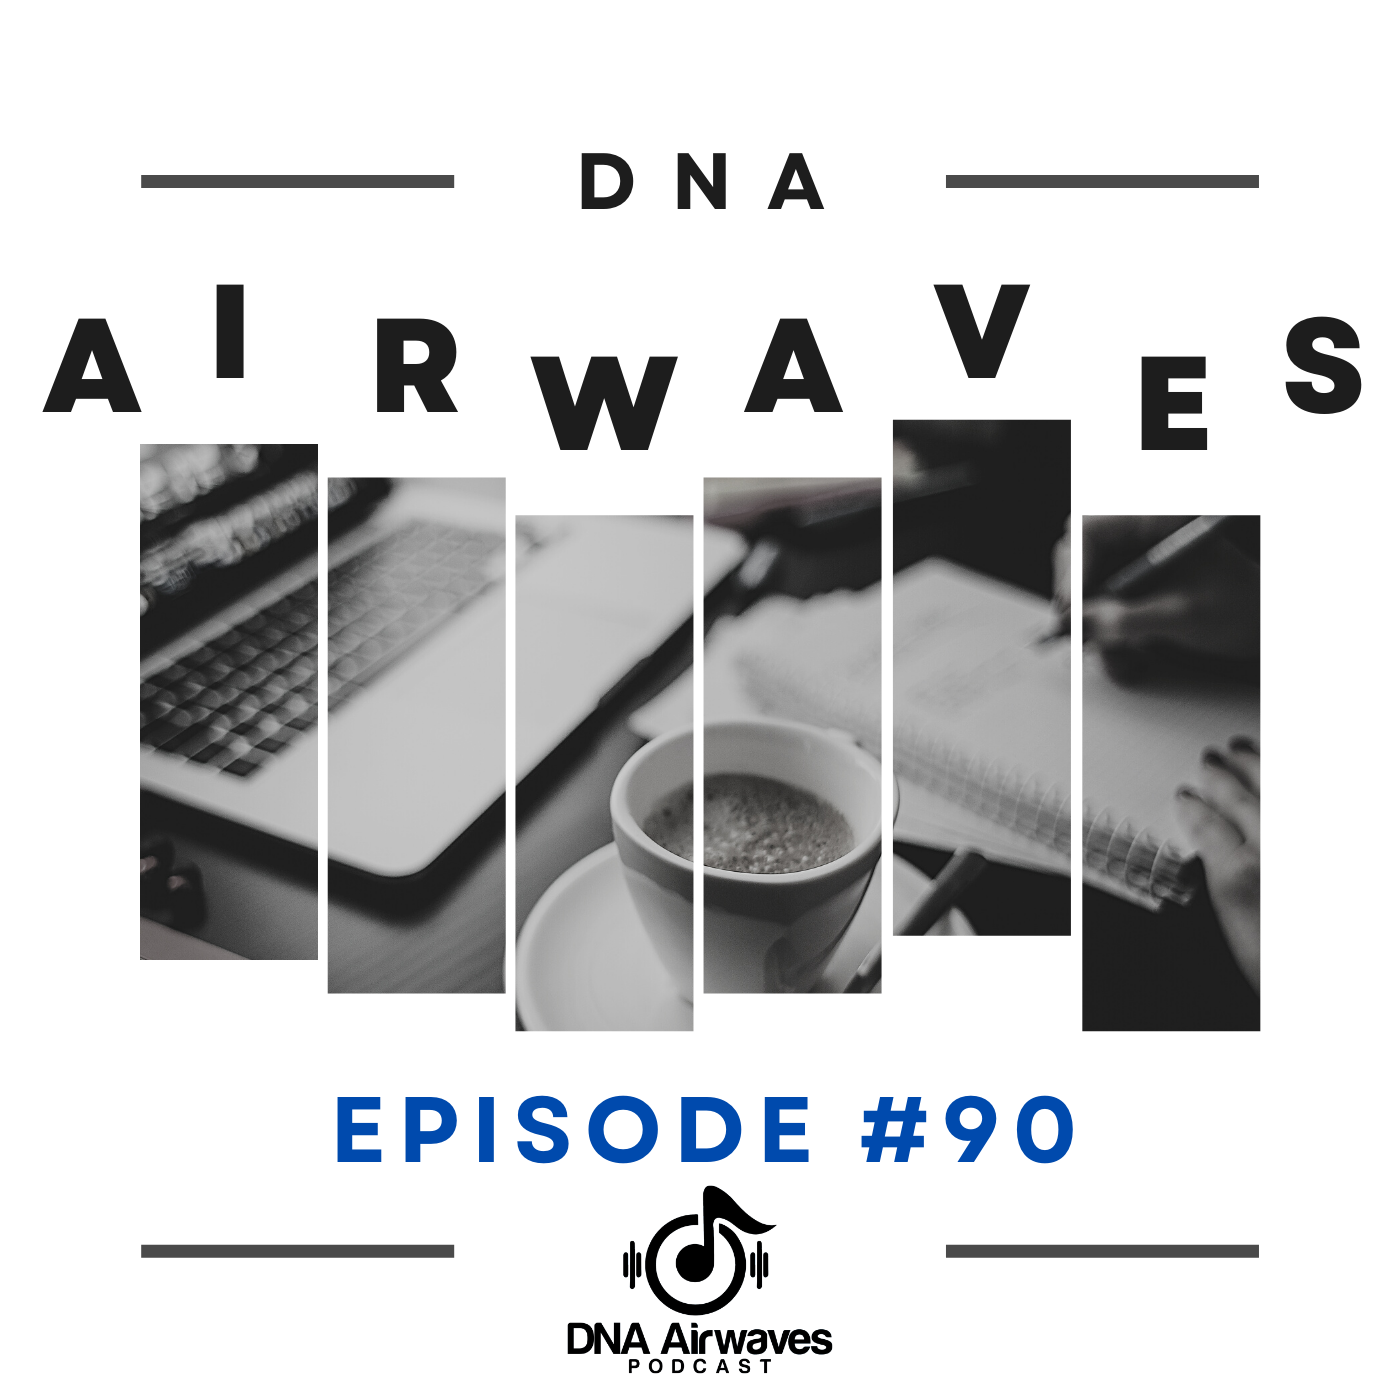 Artwork for podcast The DNA Airwaves